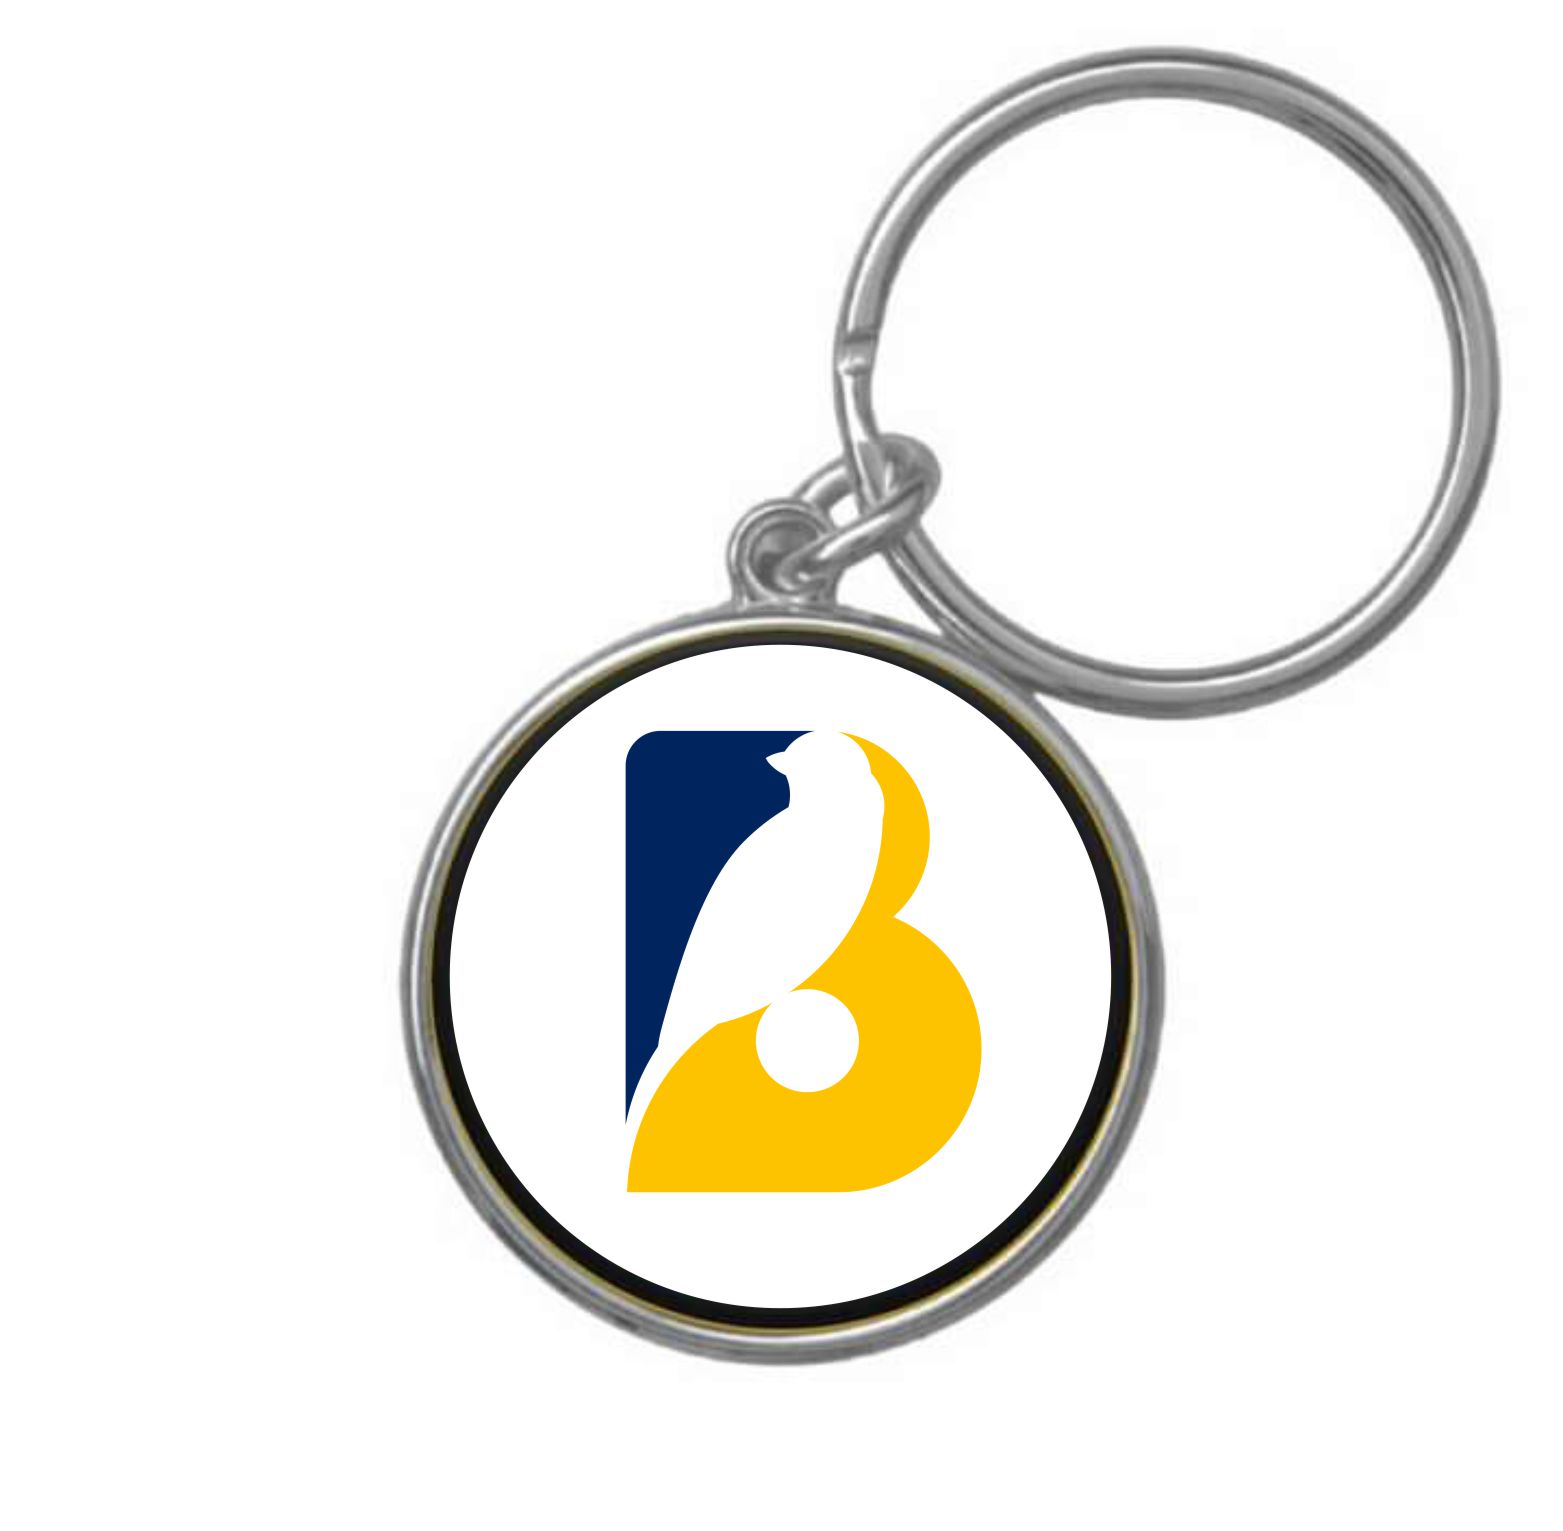 B Bird Logo